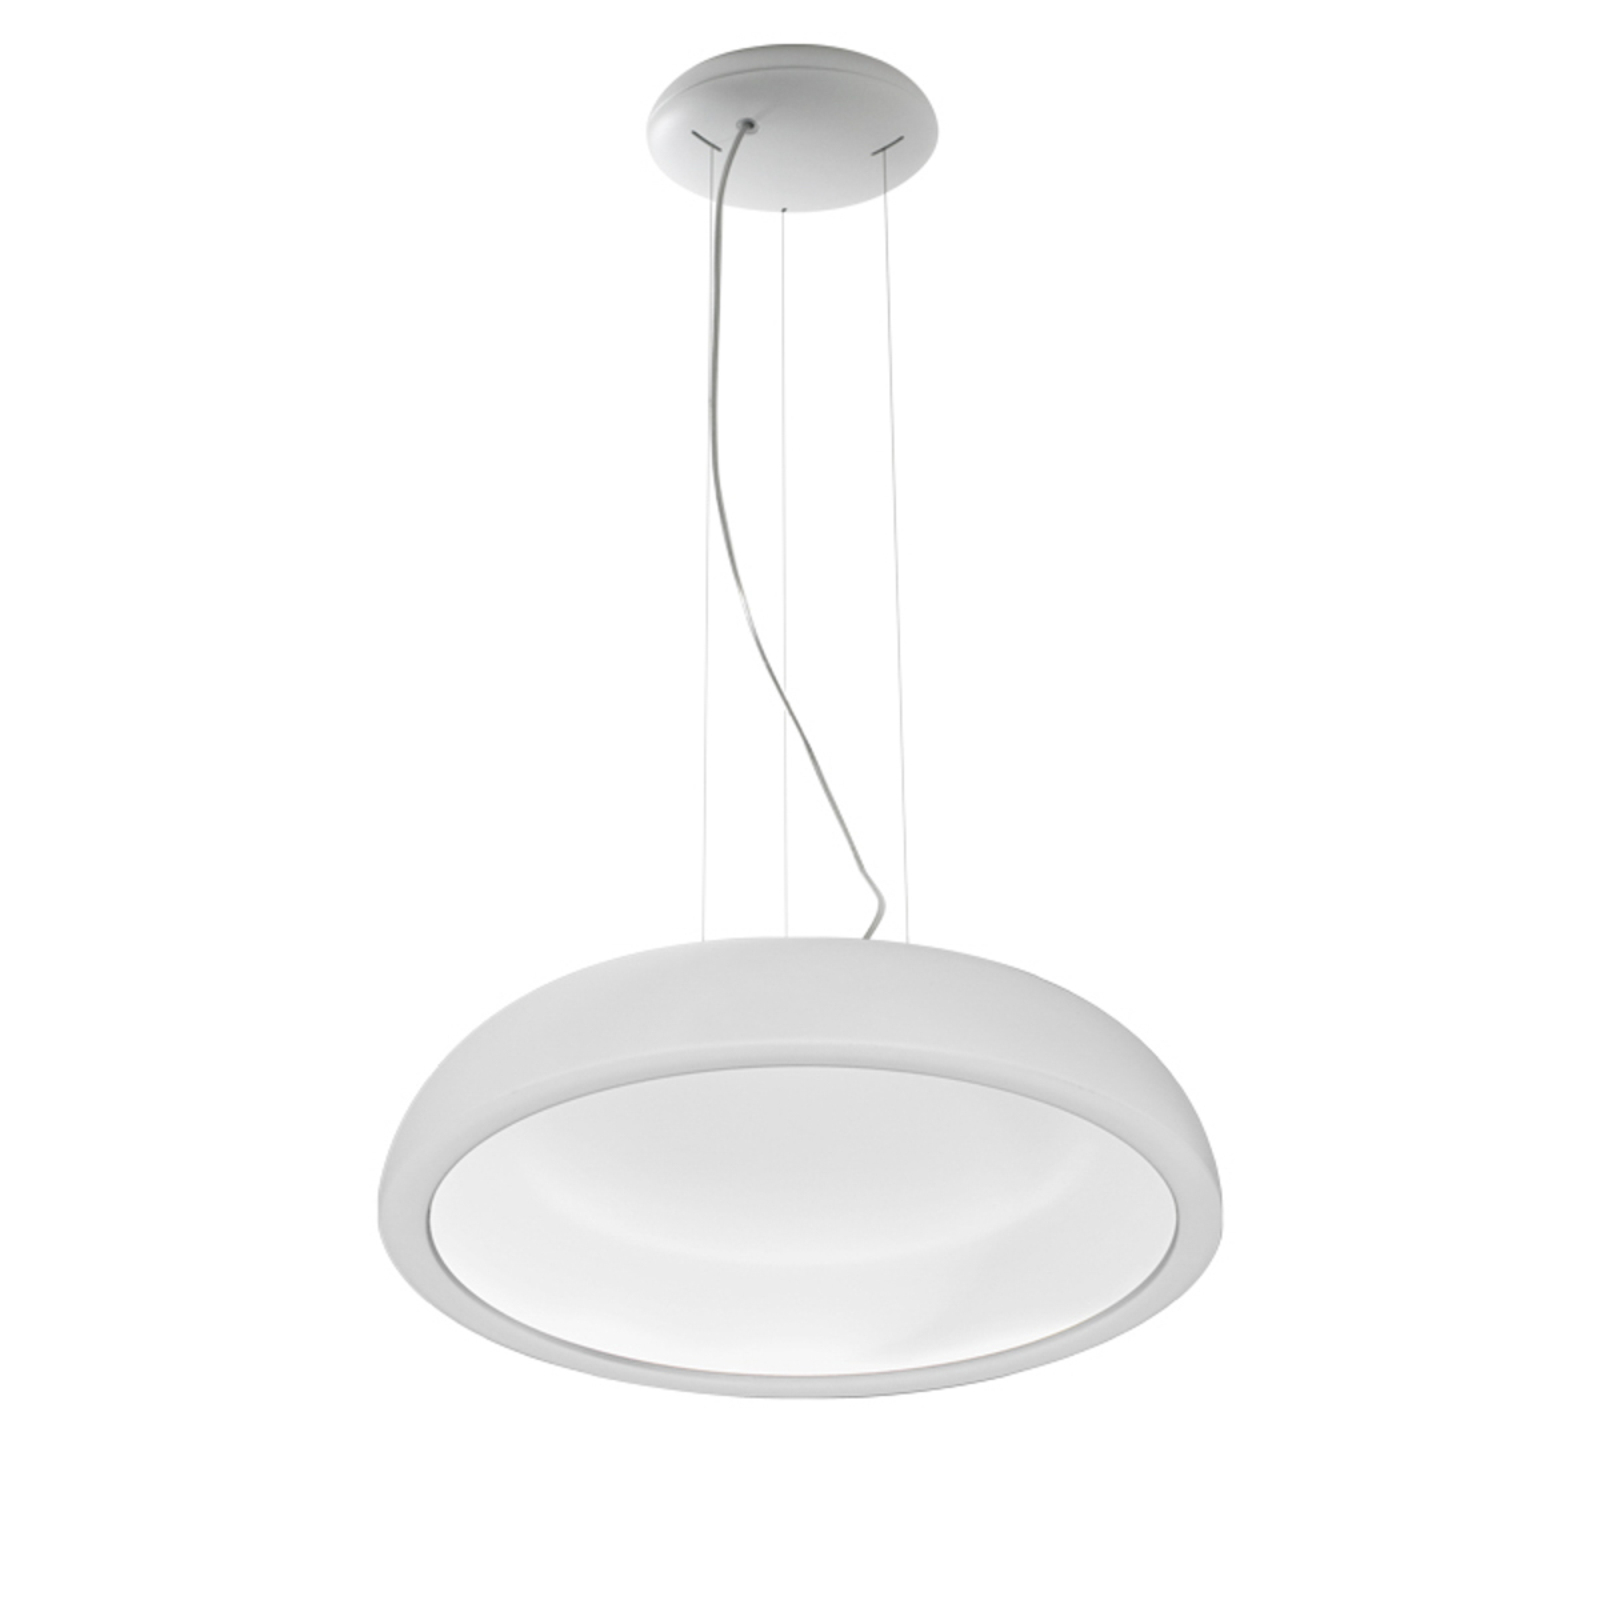 Stilnovo Reflexio LED a sospensione, Ø46cm, bianco